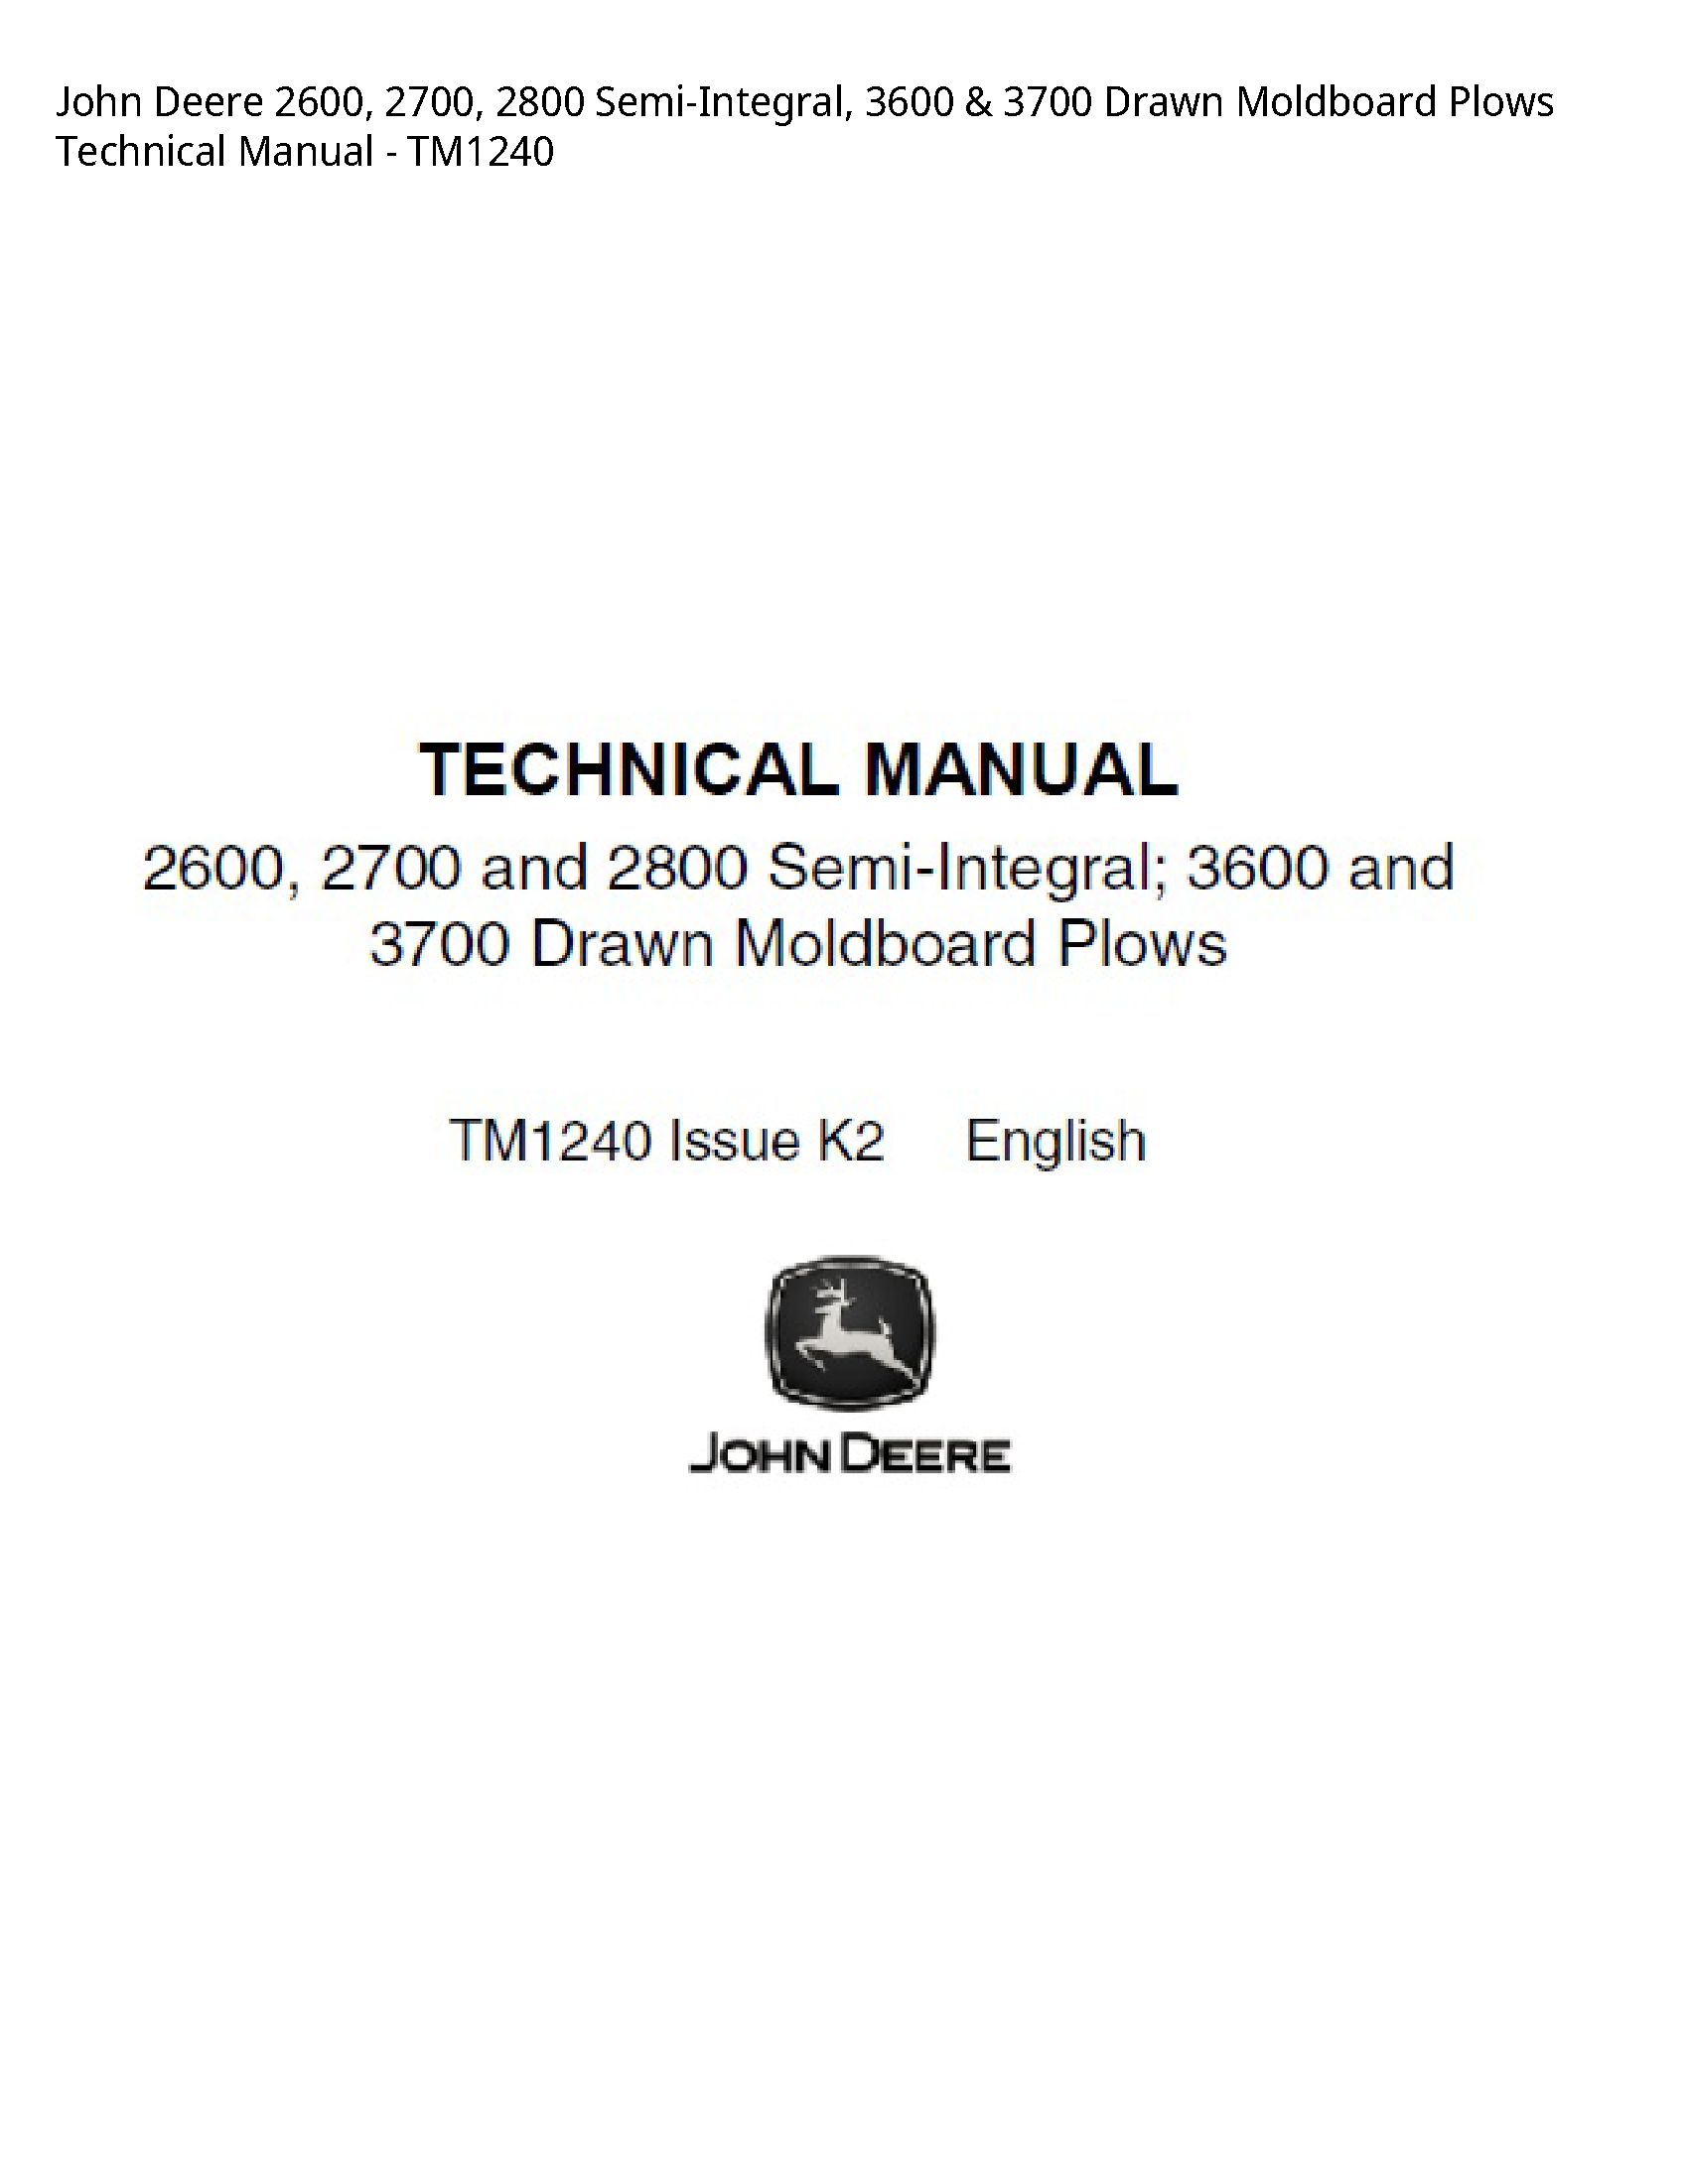 John Deere 2600 Semi-Integral manual